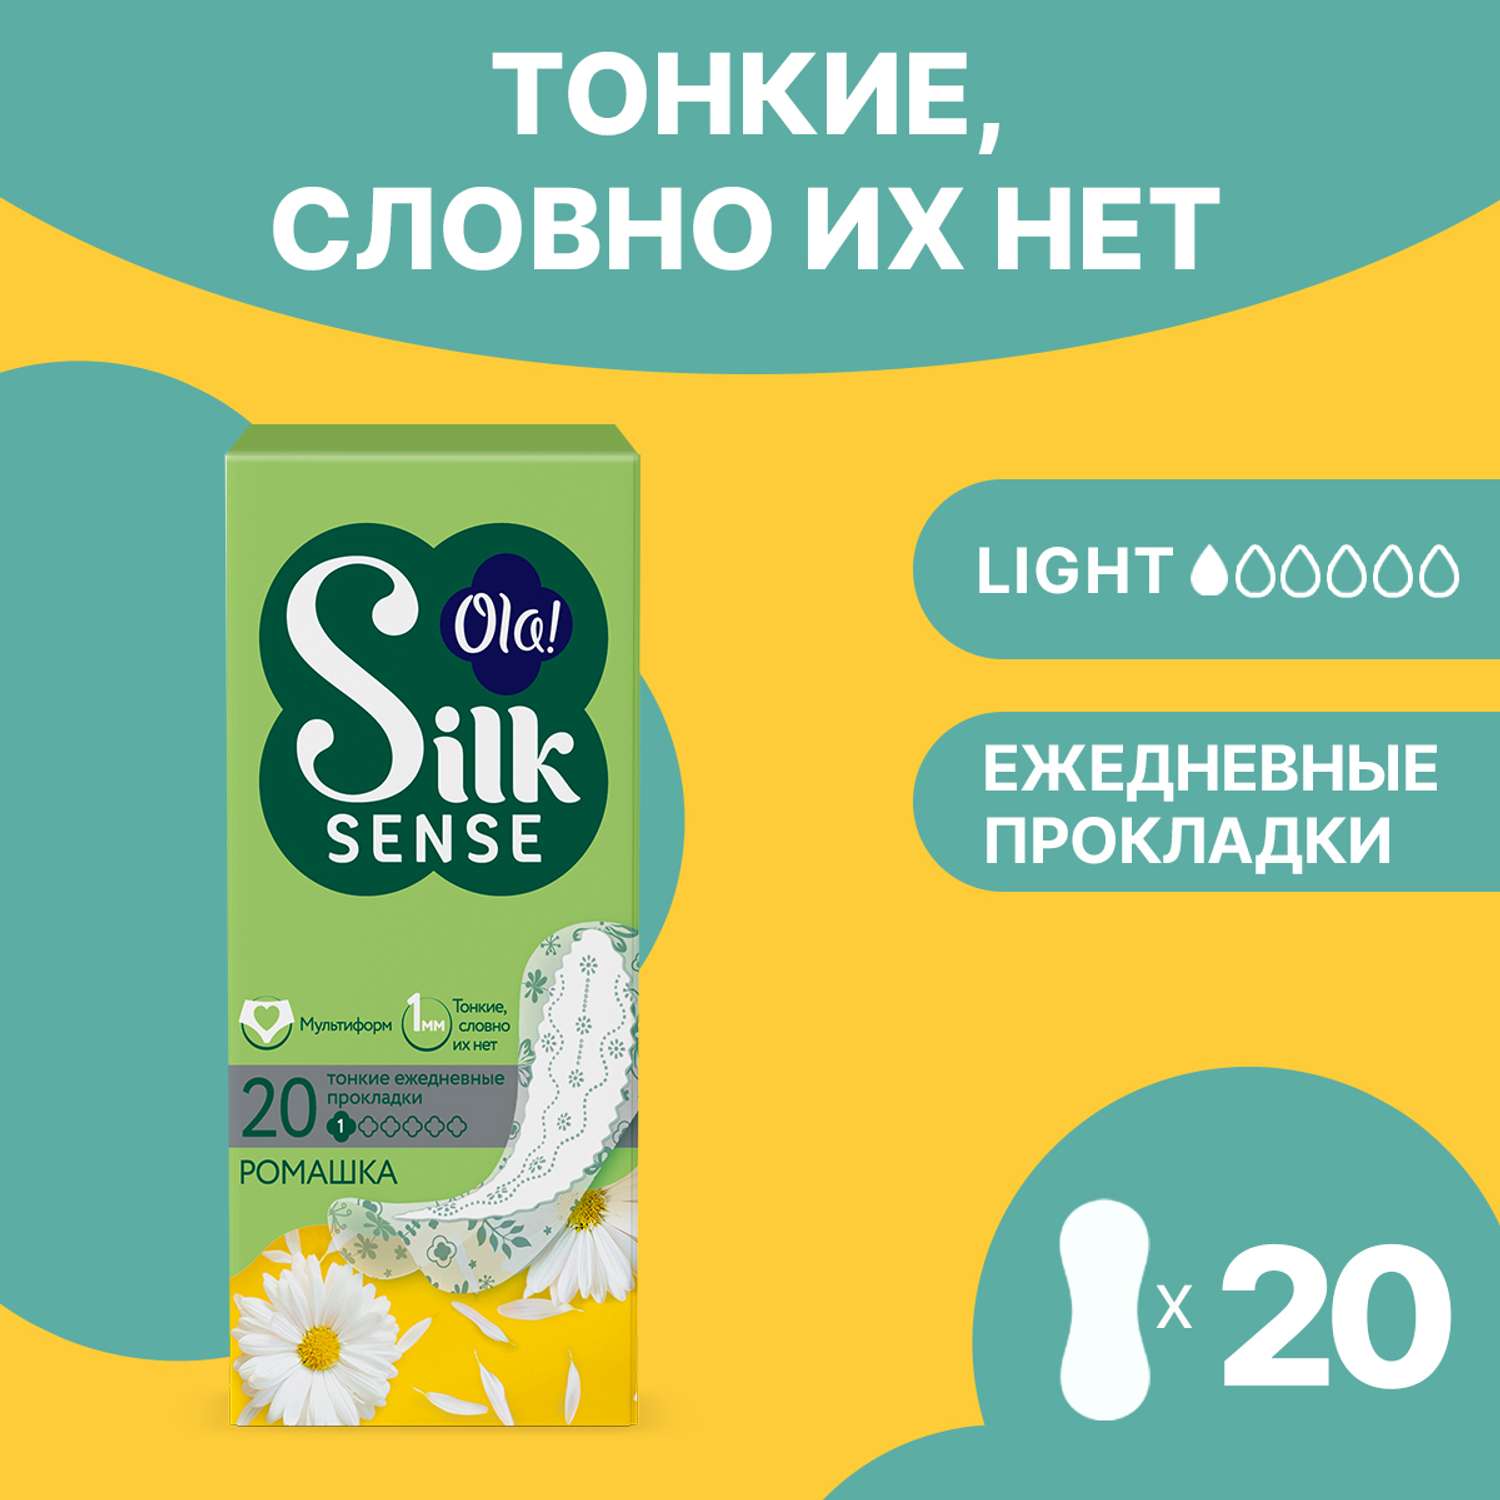 Ежедневные прокладки тонкие Ola! Silk Sense LIGHT стринг-мультиформ аромат Ромашка 20 шт - фото 1